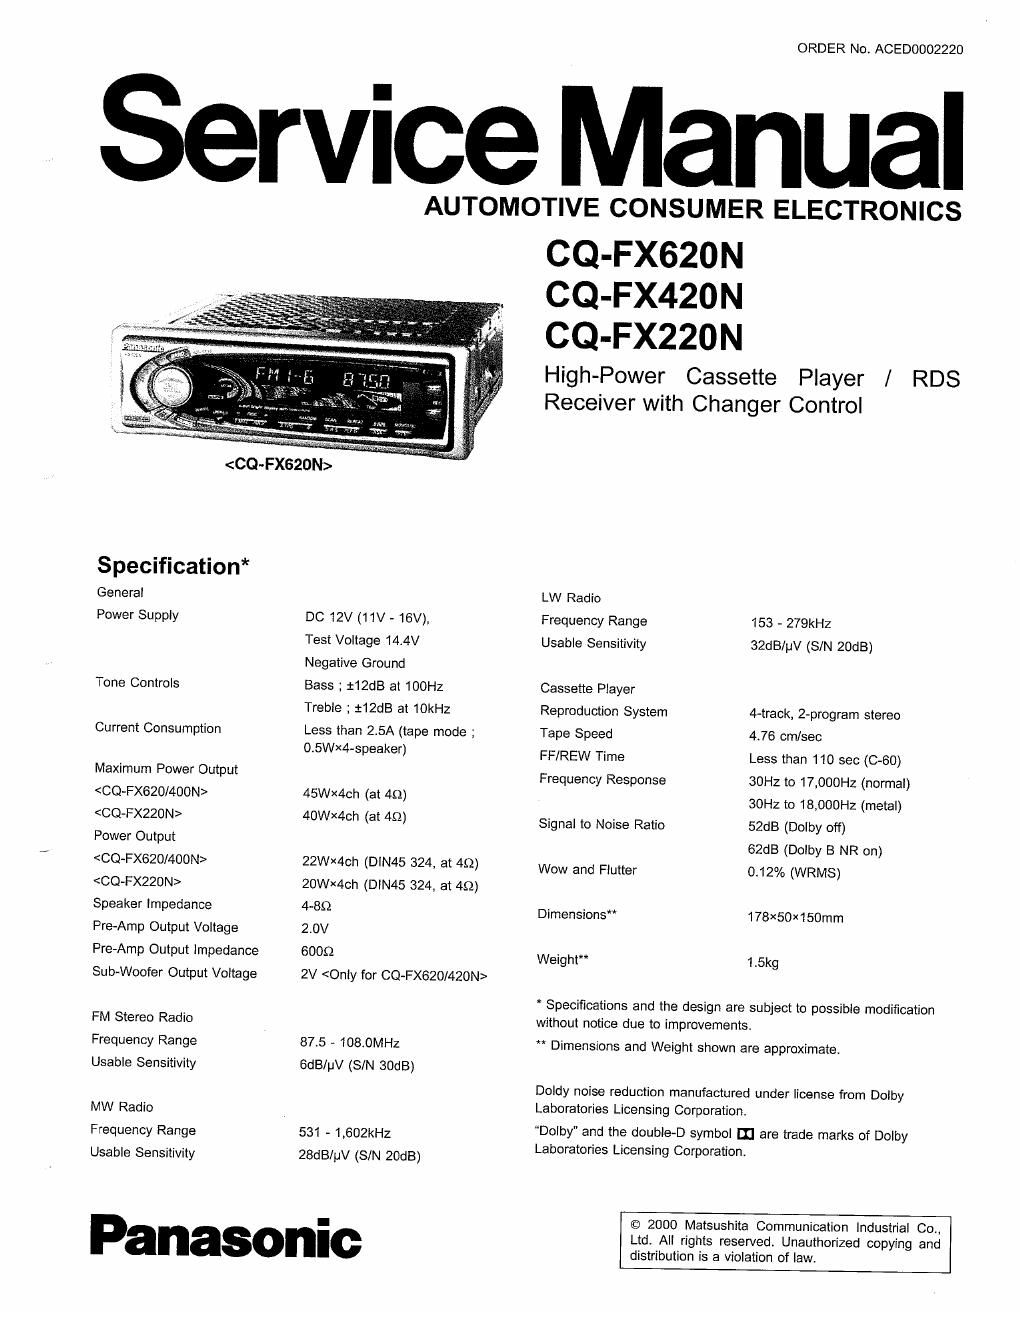 panasonic cq fx 220 n service manual